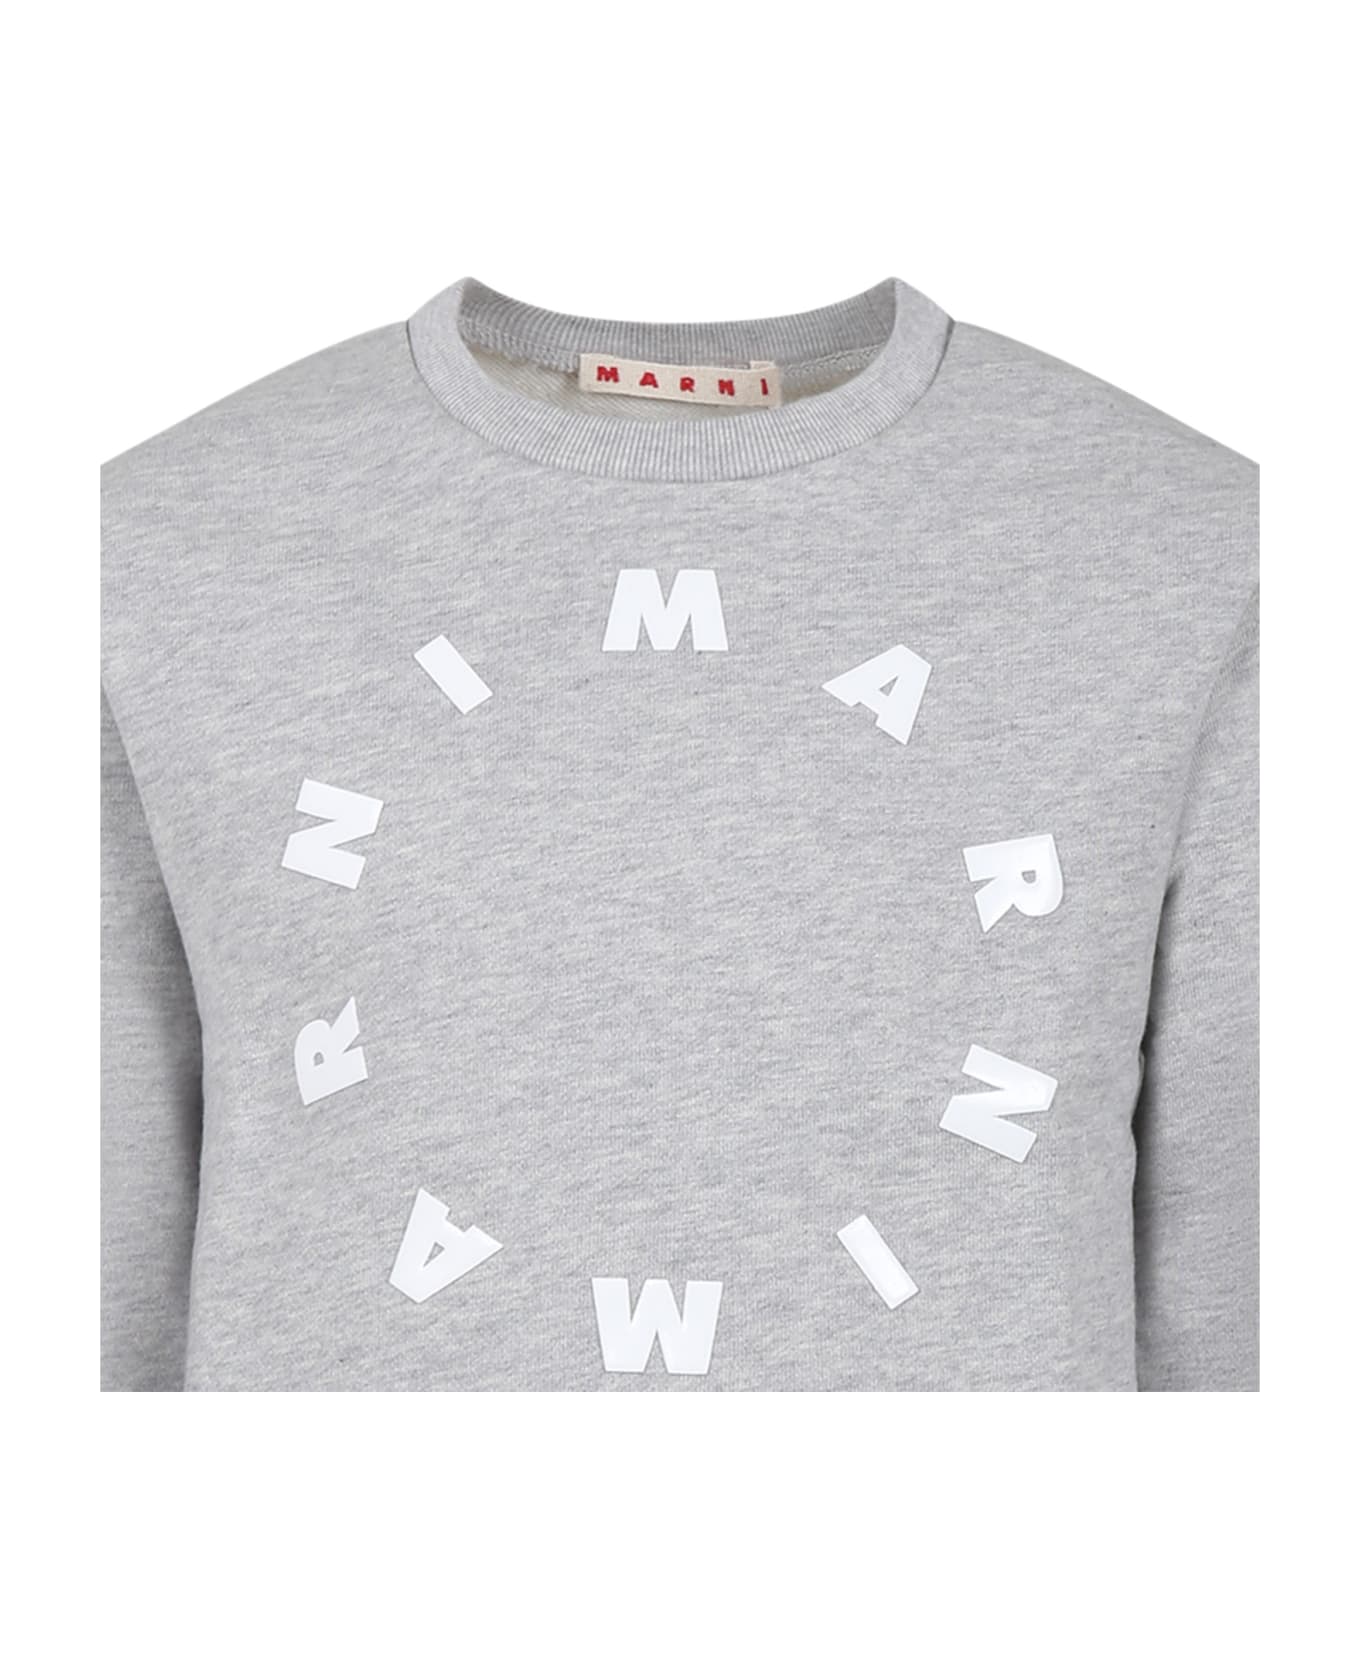 Marni Grey Sweatshirt For Kids With Logo - Grey